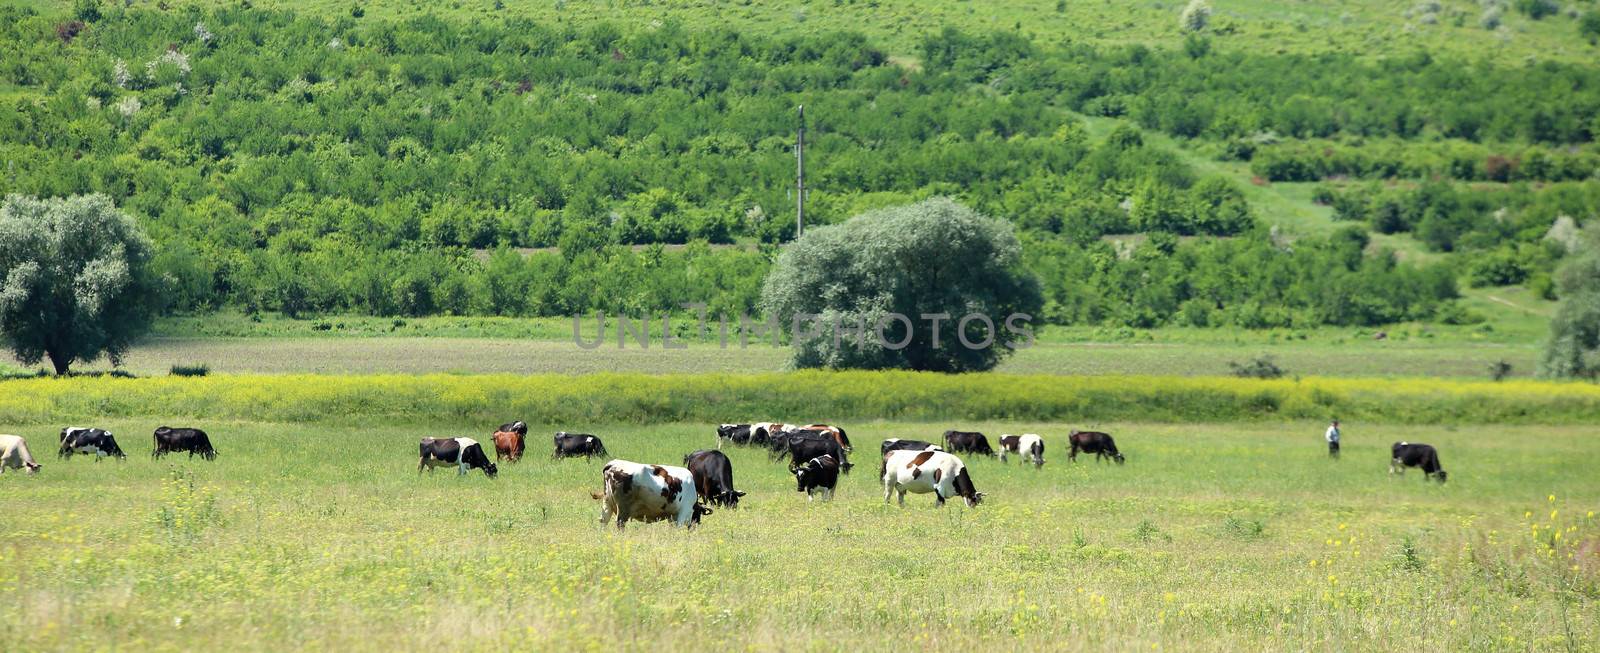 cows grazing in a farmland by indigolotos